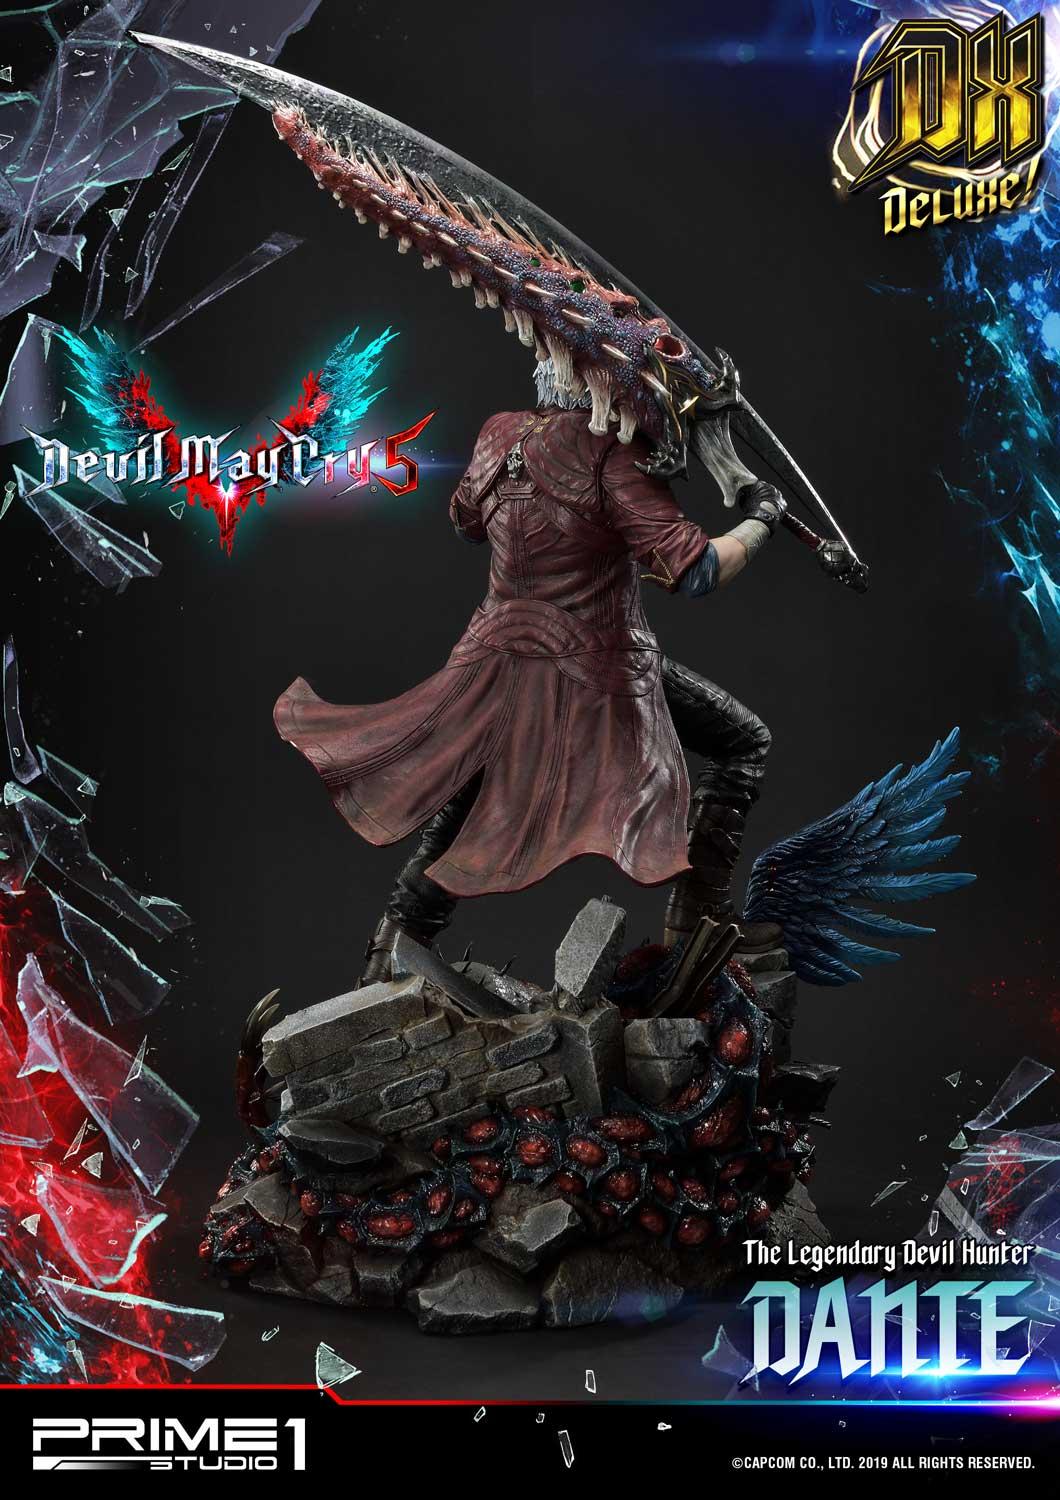 Devil May Cry V - Dante Statue by Prime 1 Studio - The Toyark - News